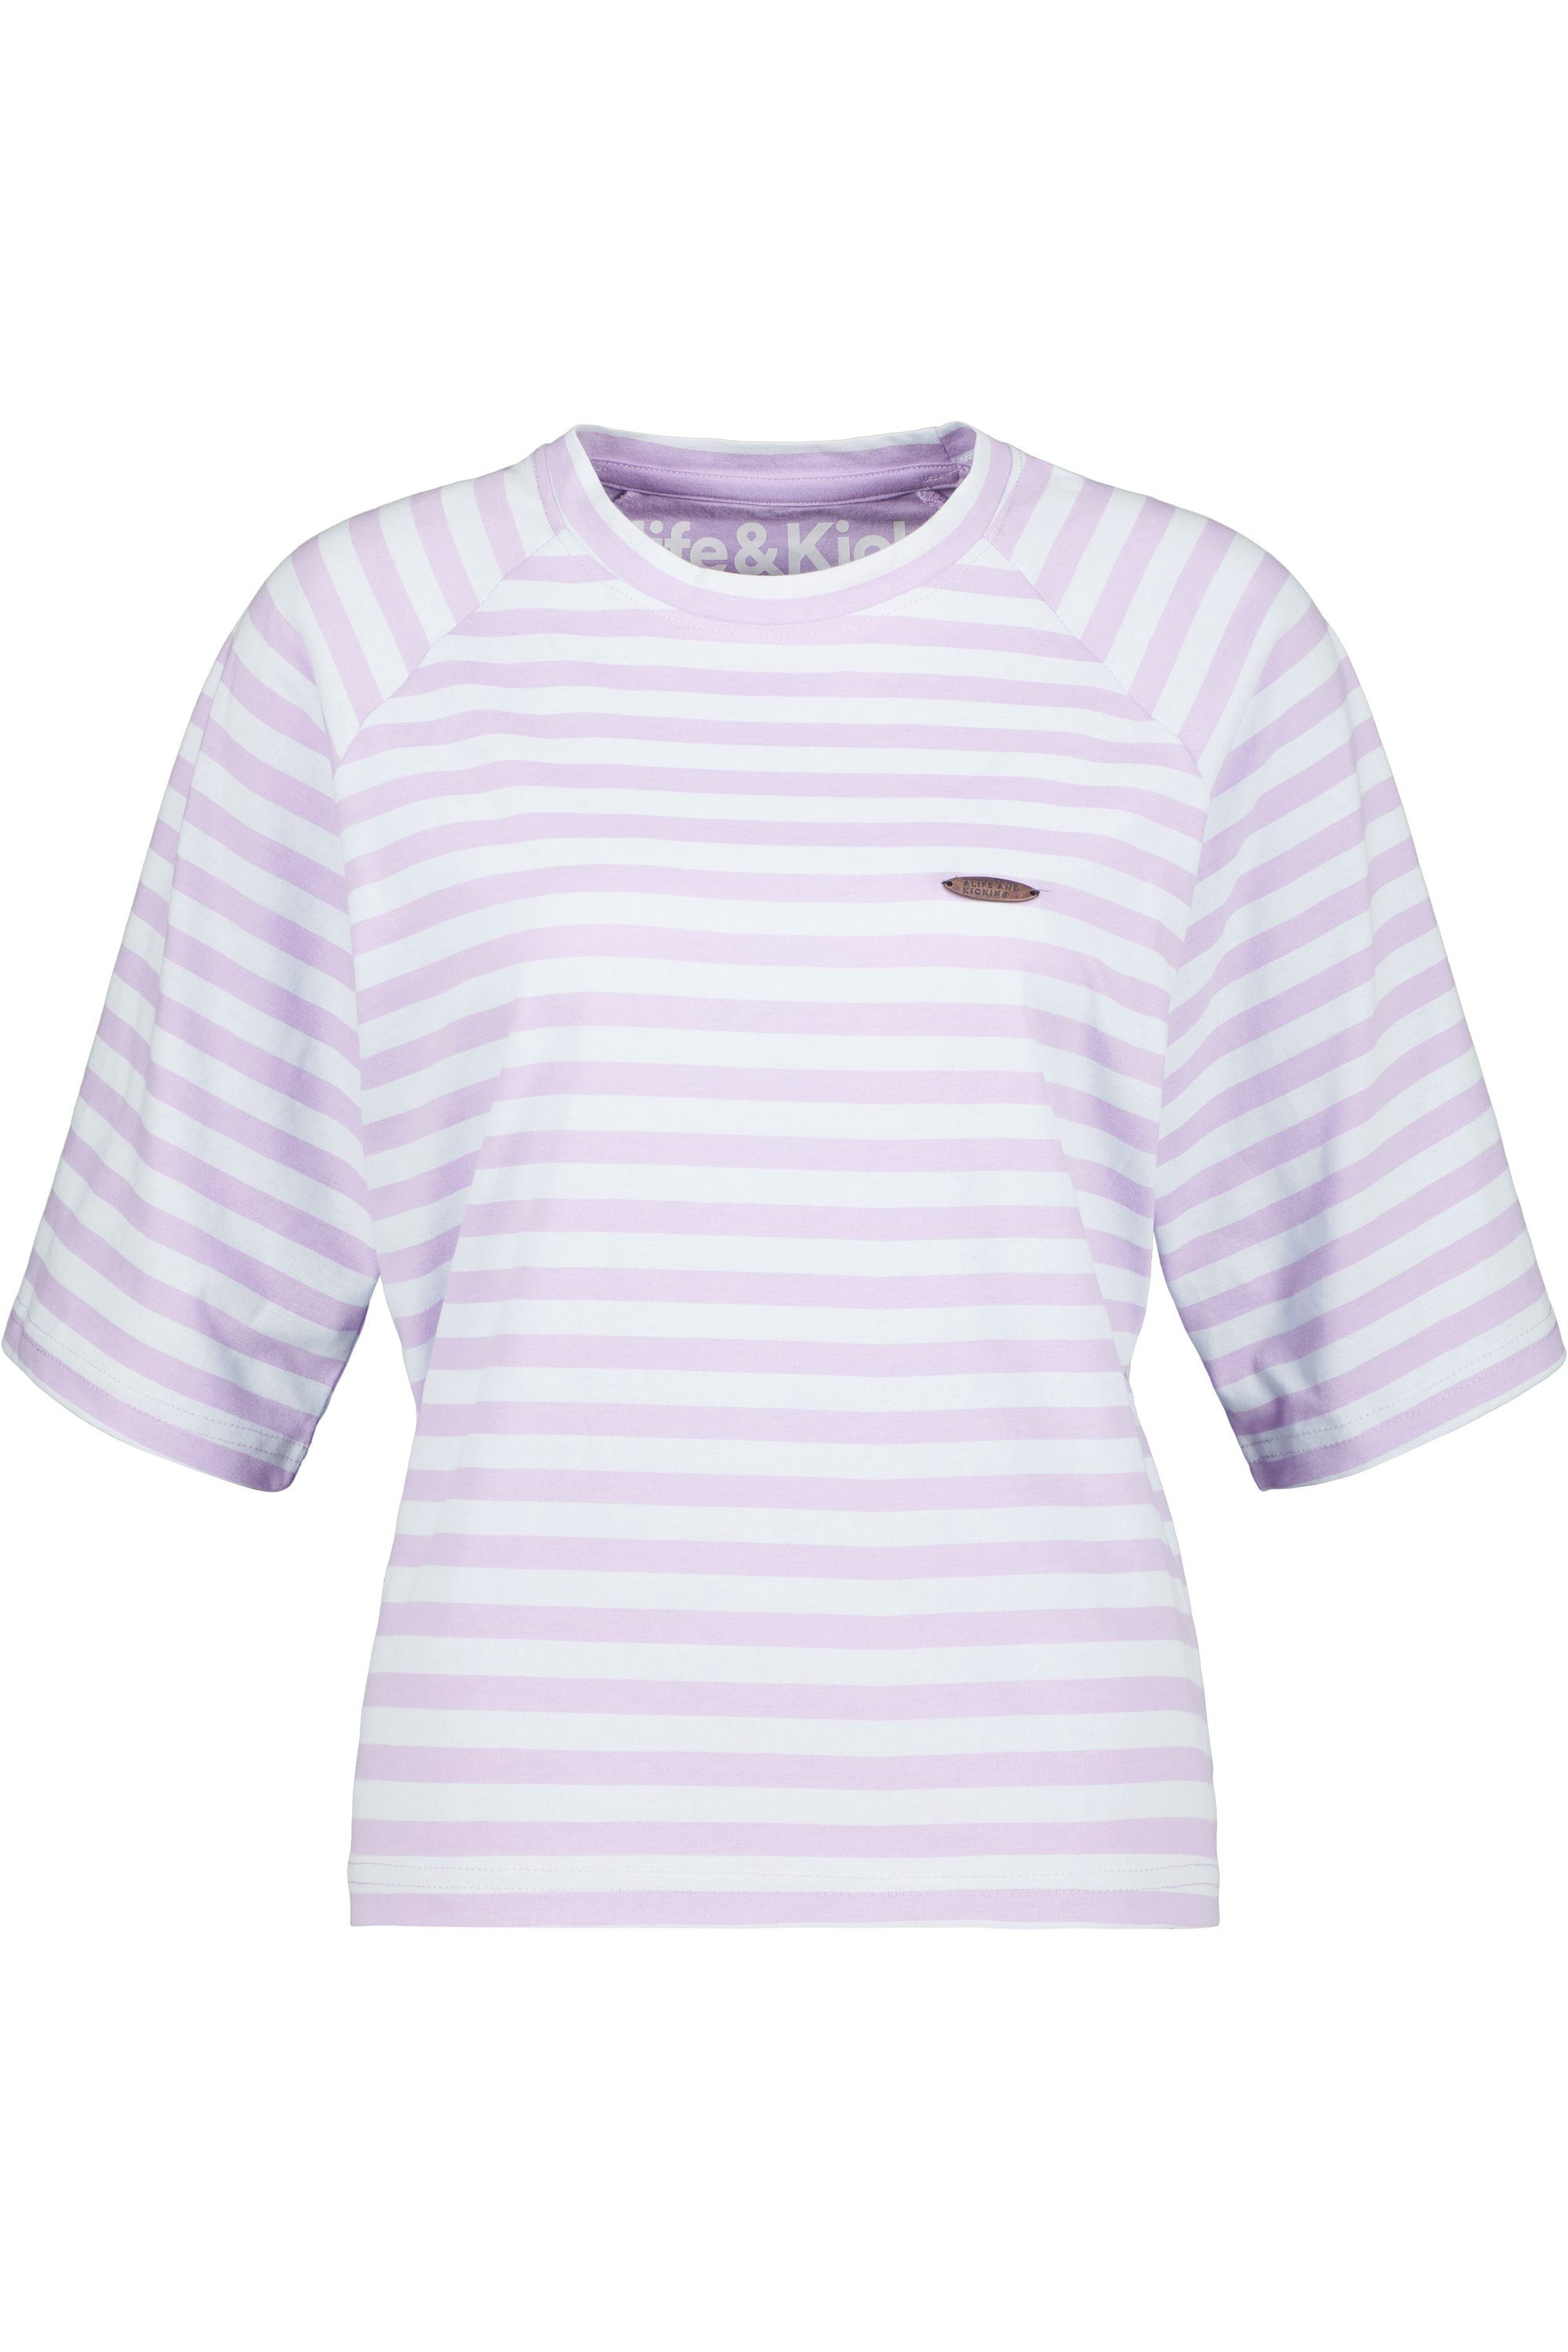 Alife & Shirt Z RubyAK Kickin digital Rundhalsshirt Damen Shirt lavender Kurzarmshirt